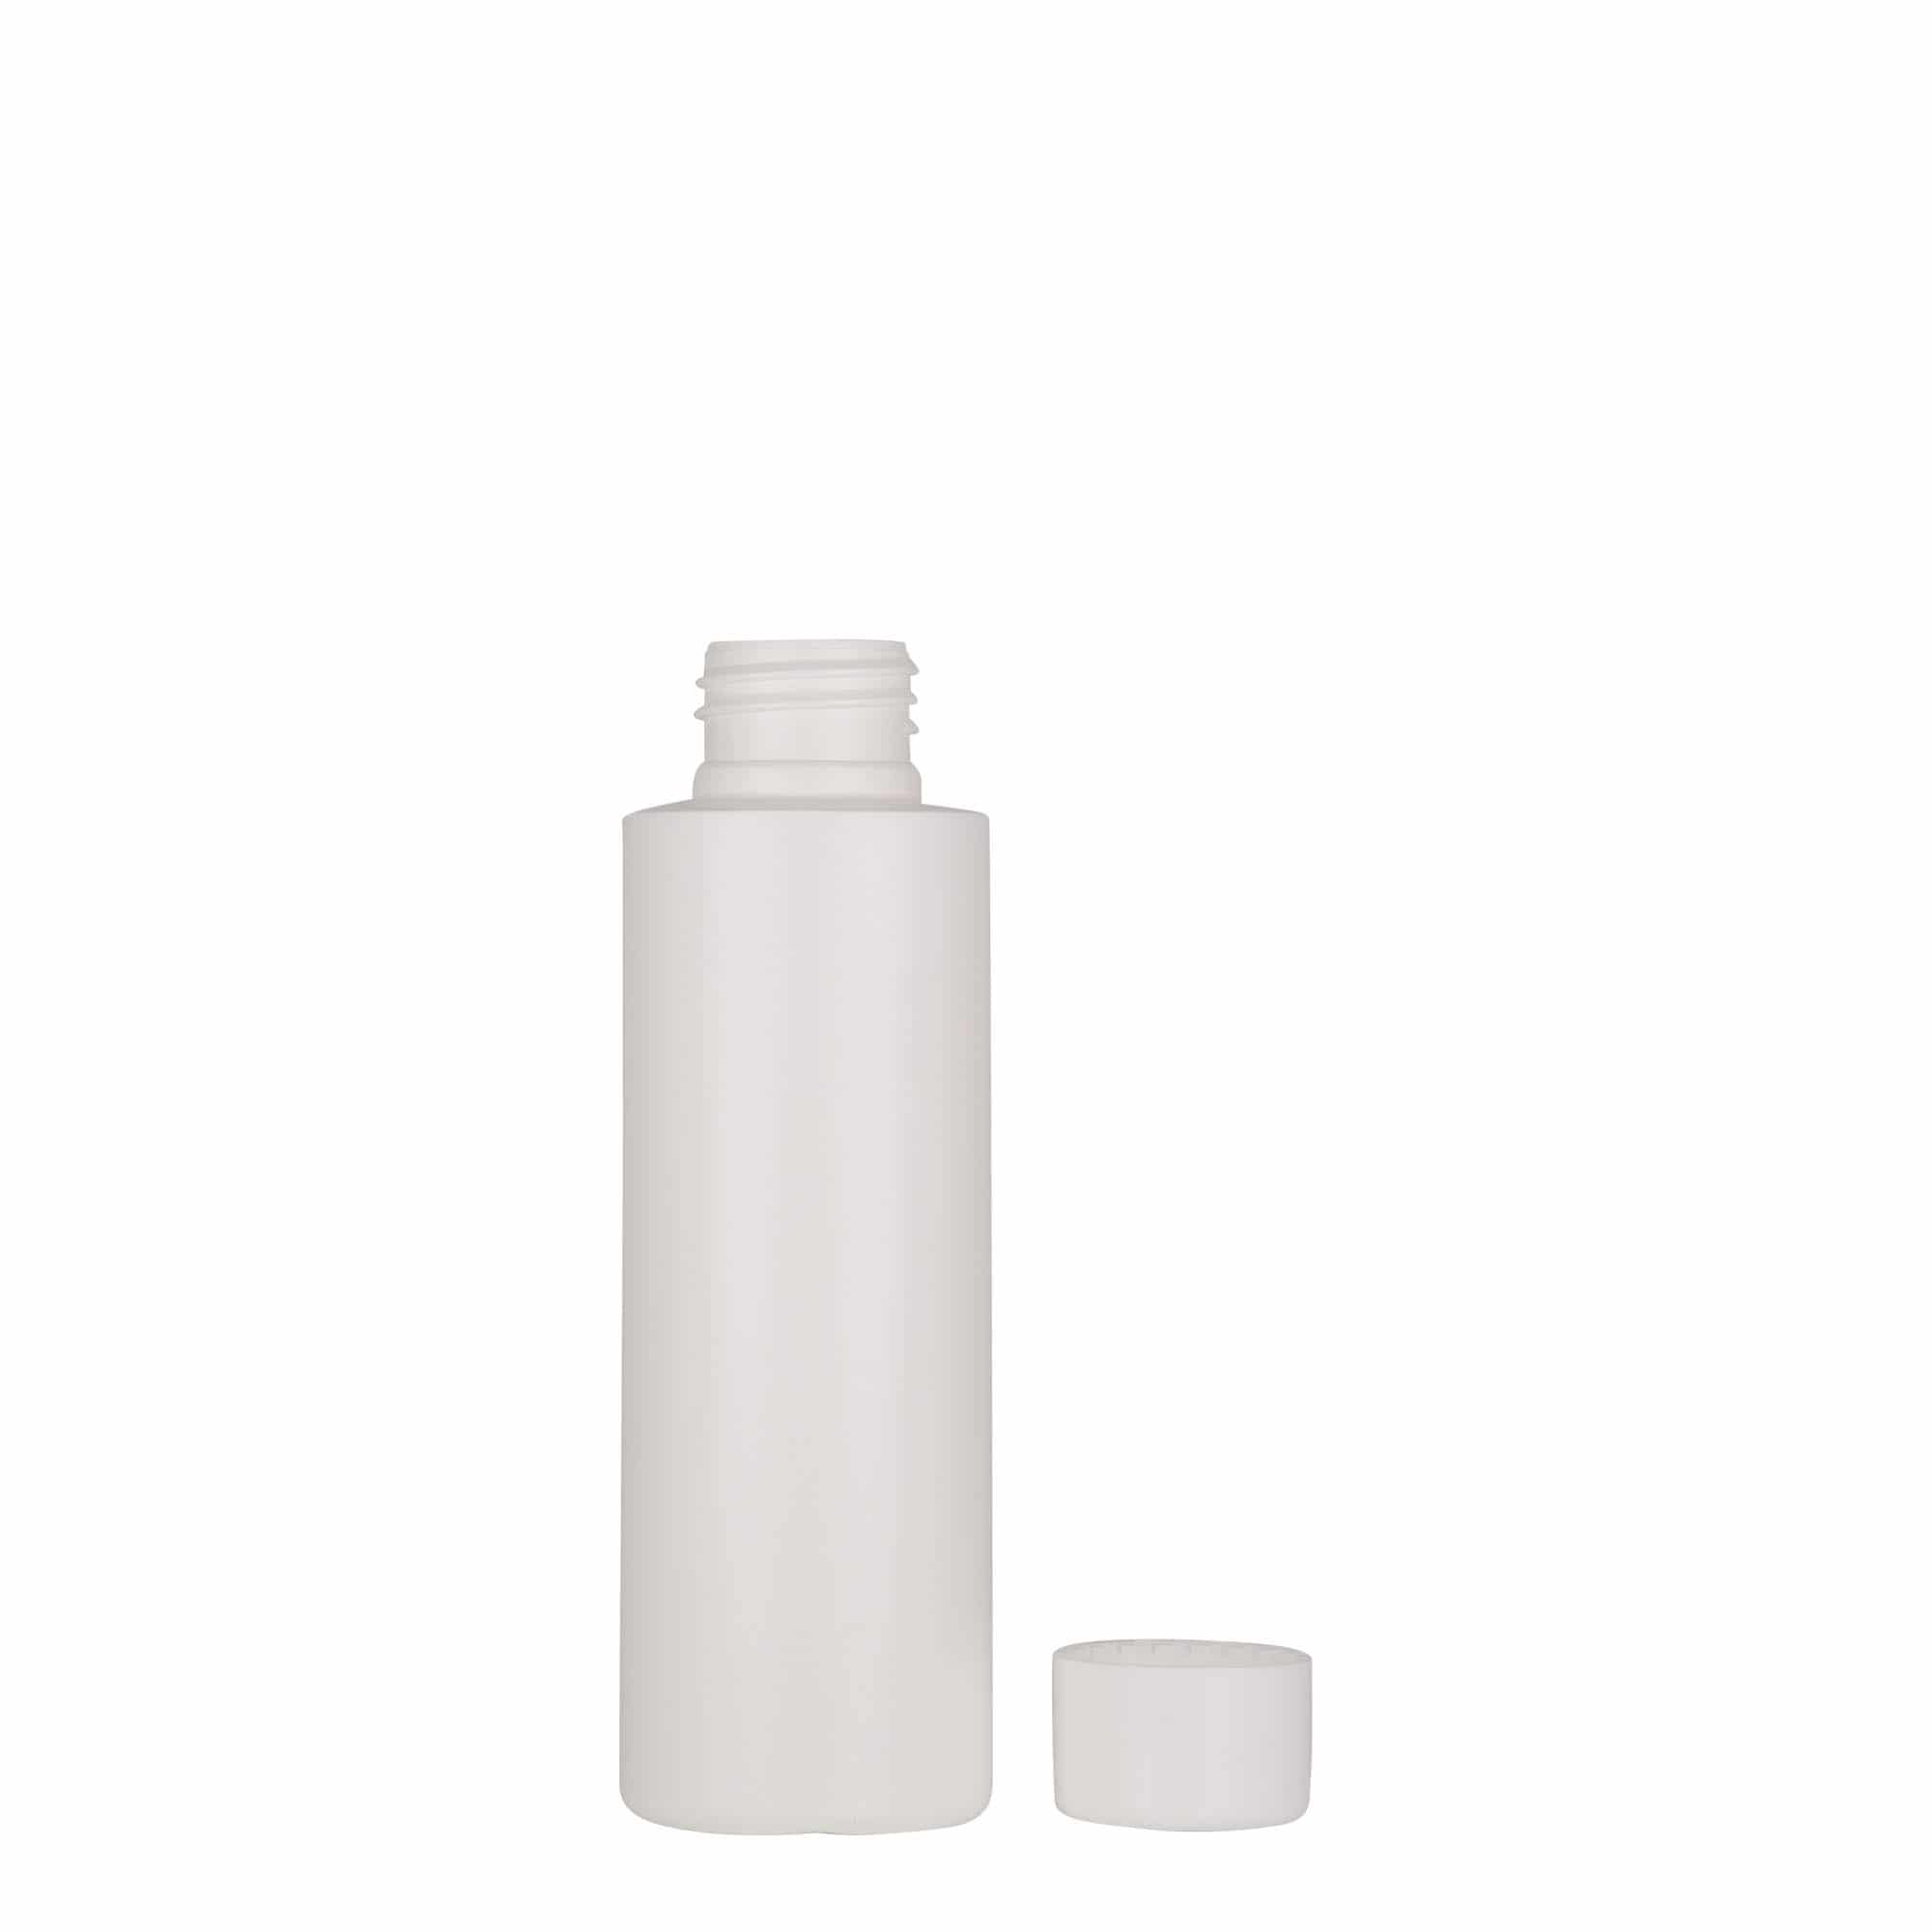 100 ml plastic bottle 'Pipe', green HDPE, white, closure: GPI 24/410